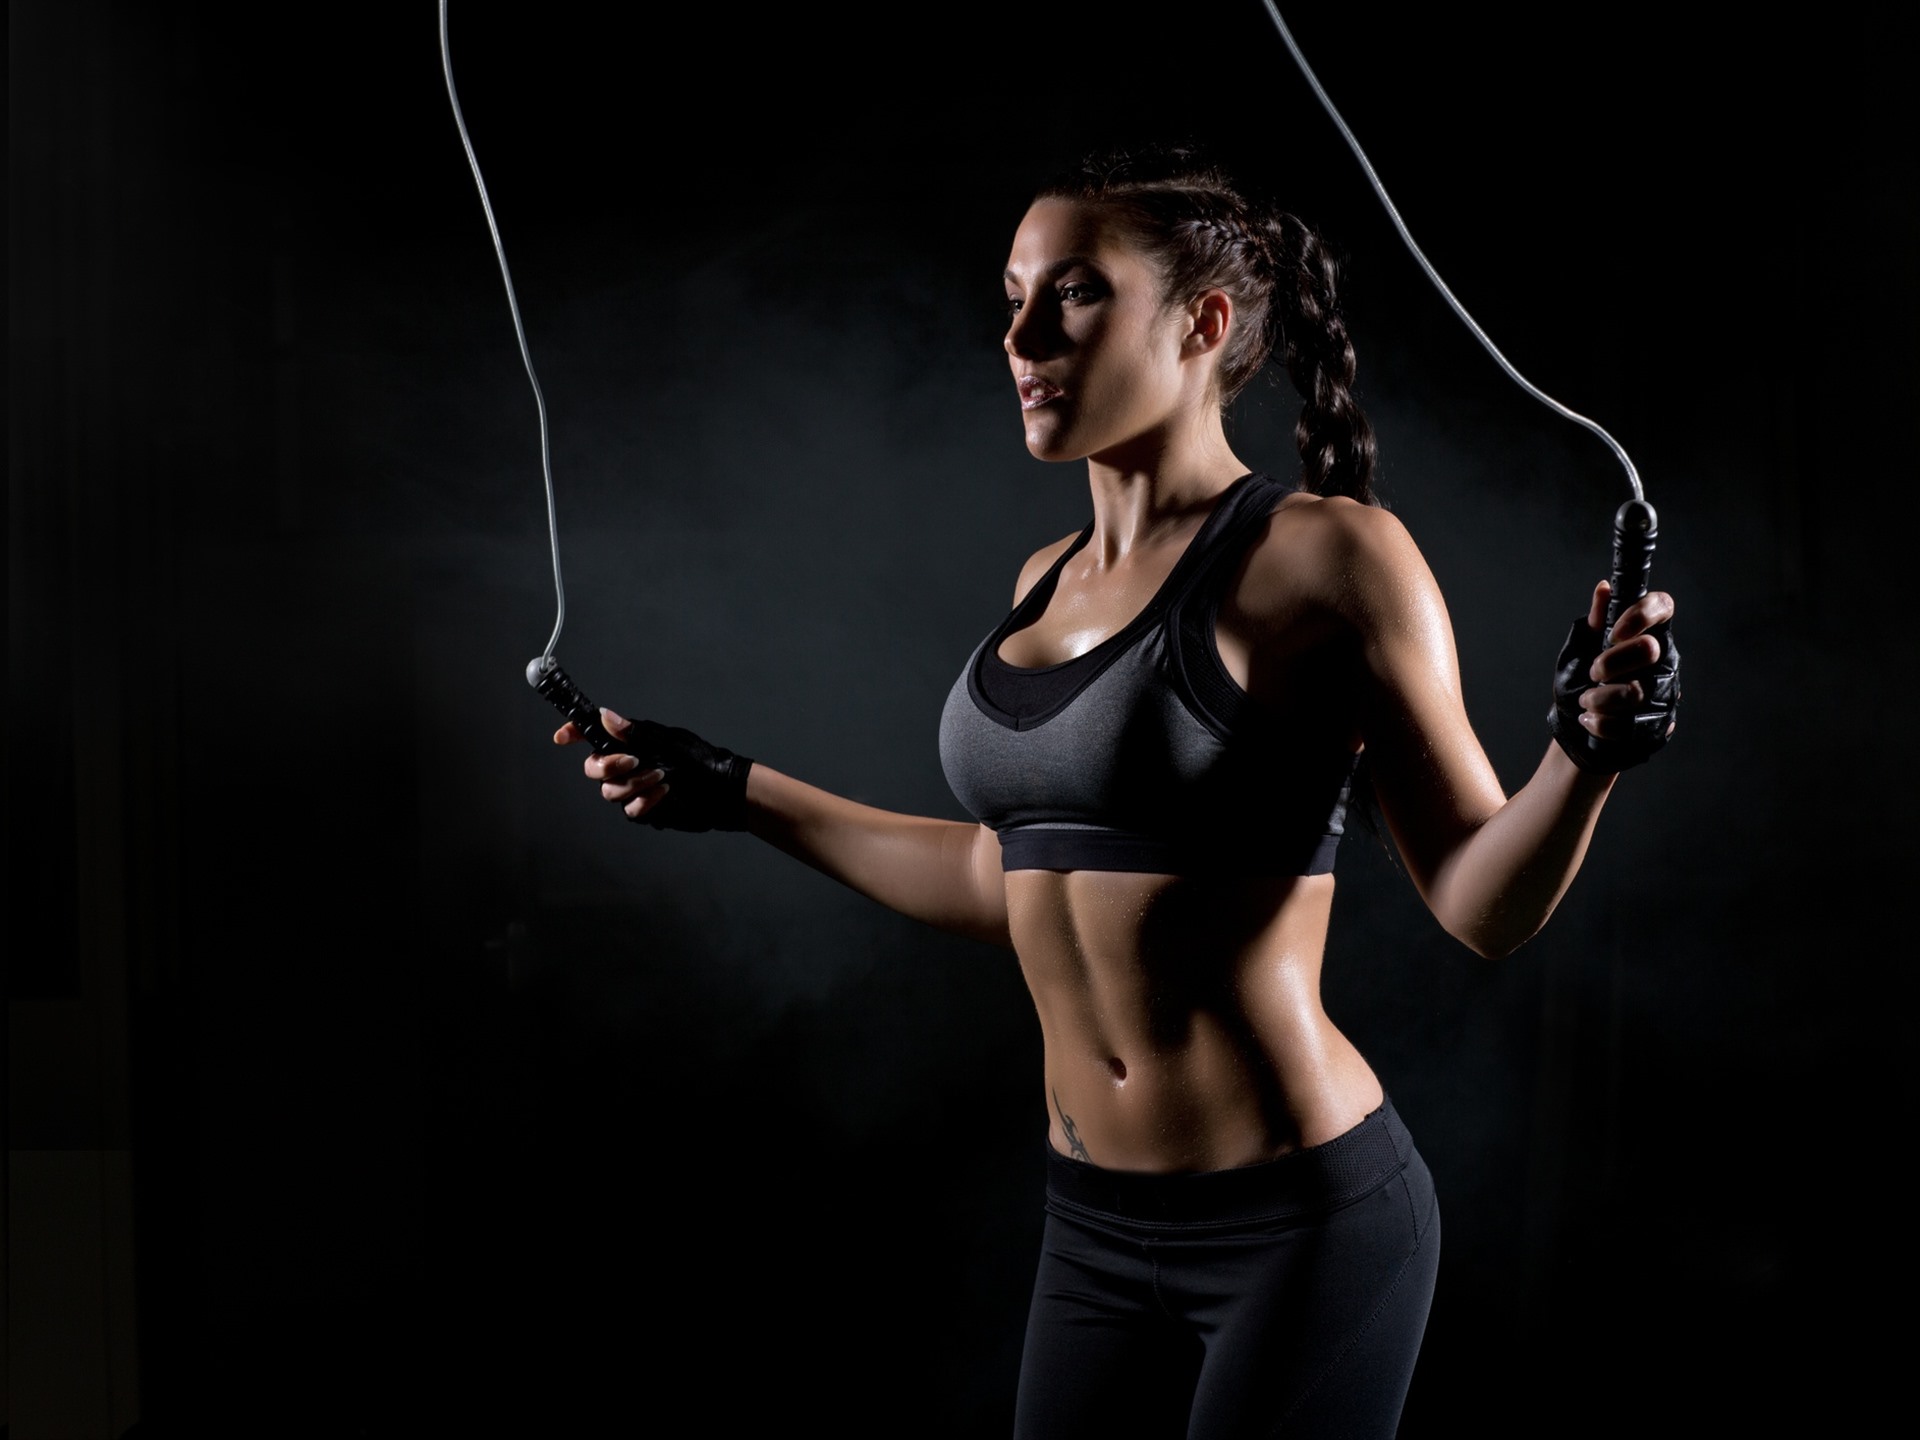 Fitness-girl-black-background-rope-skipping_1920x1440.jpg